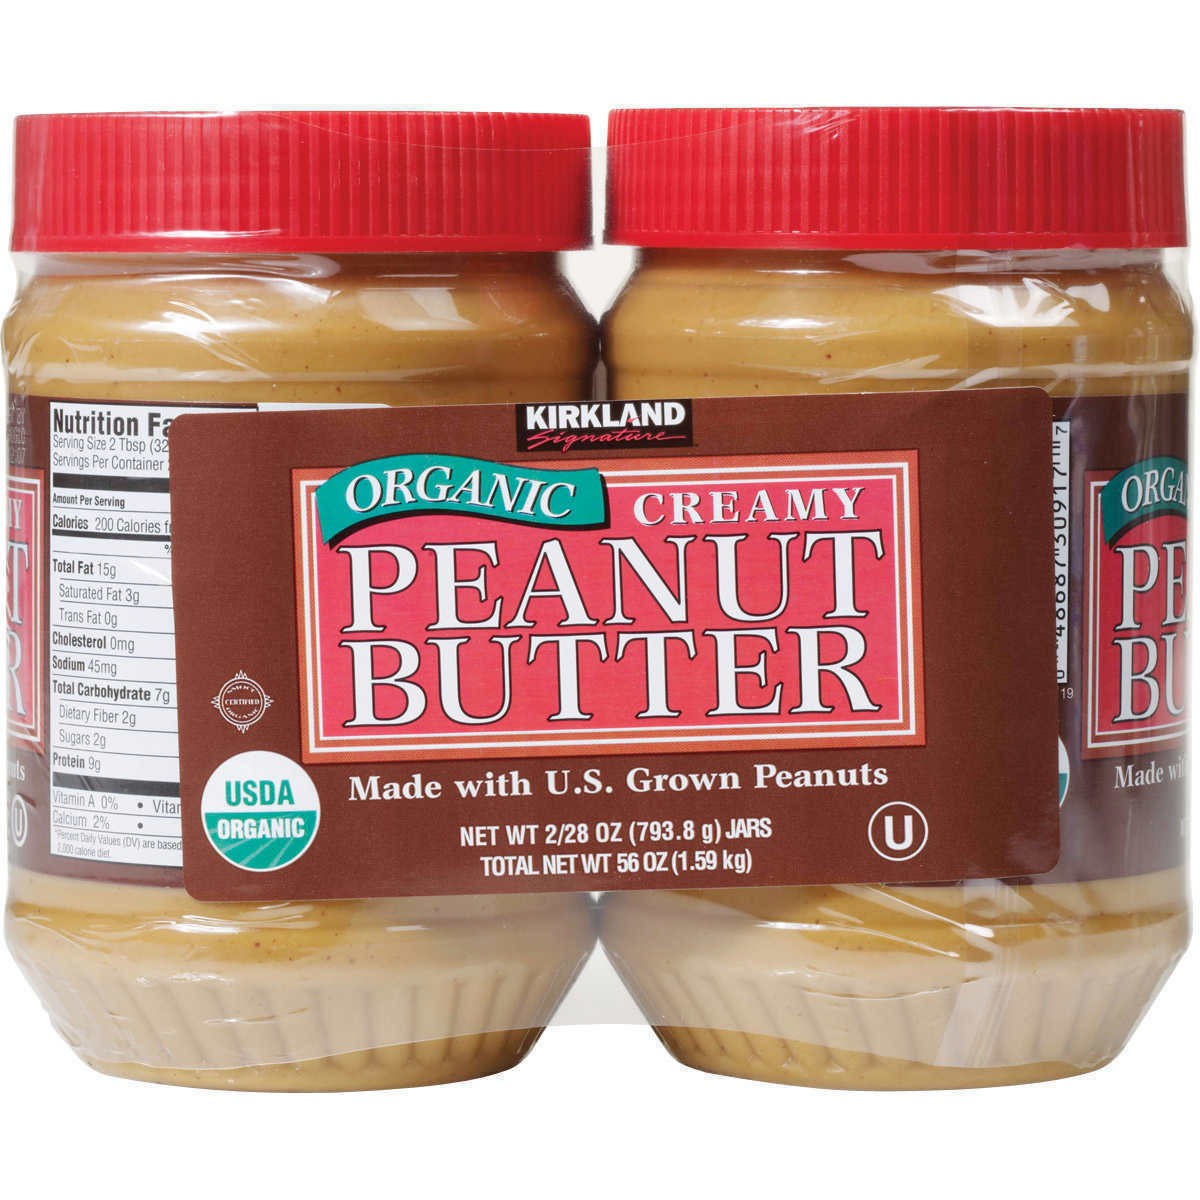 2 Jars Kirkland Signature Creamy Organic Peanut Butter, 28 Oz Each